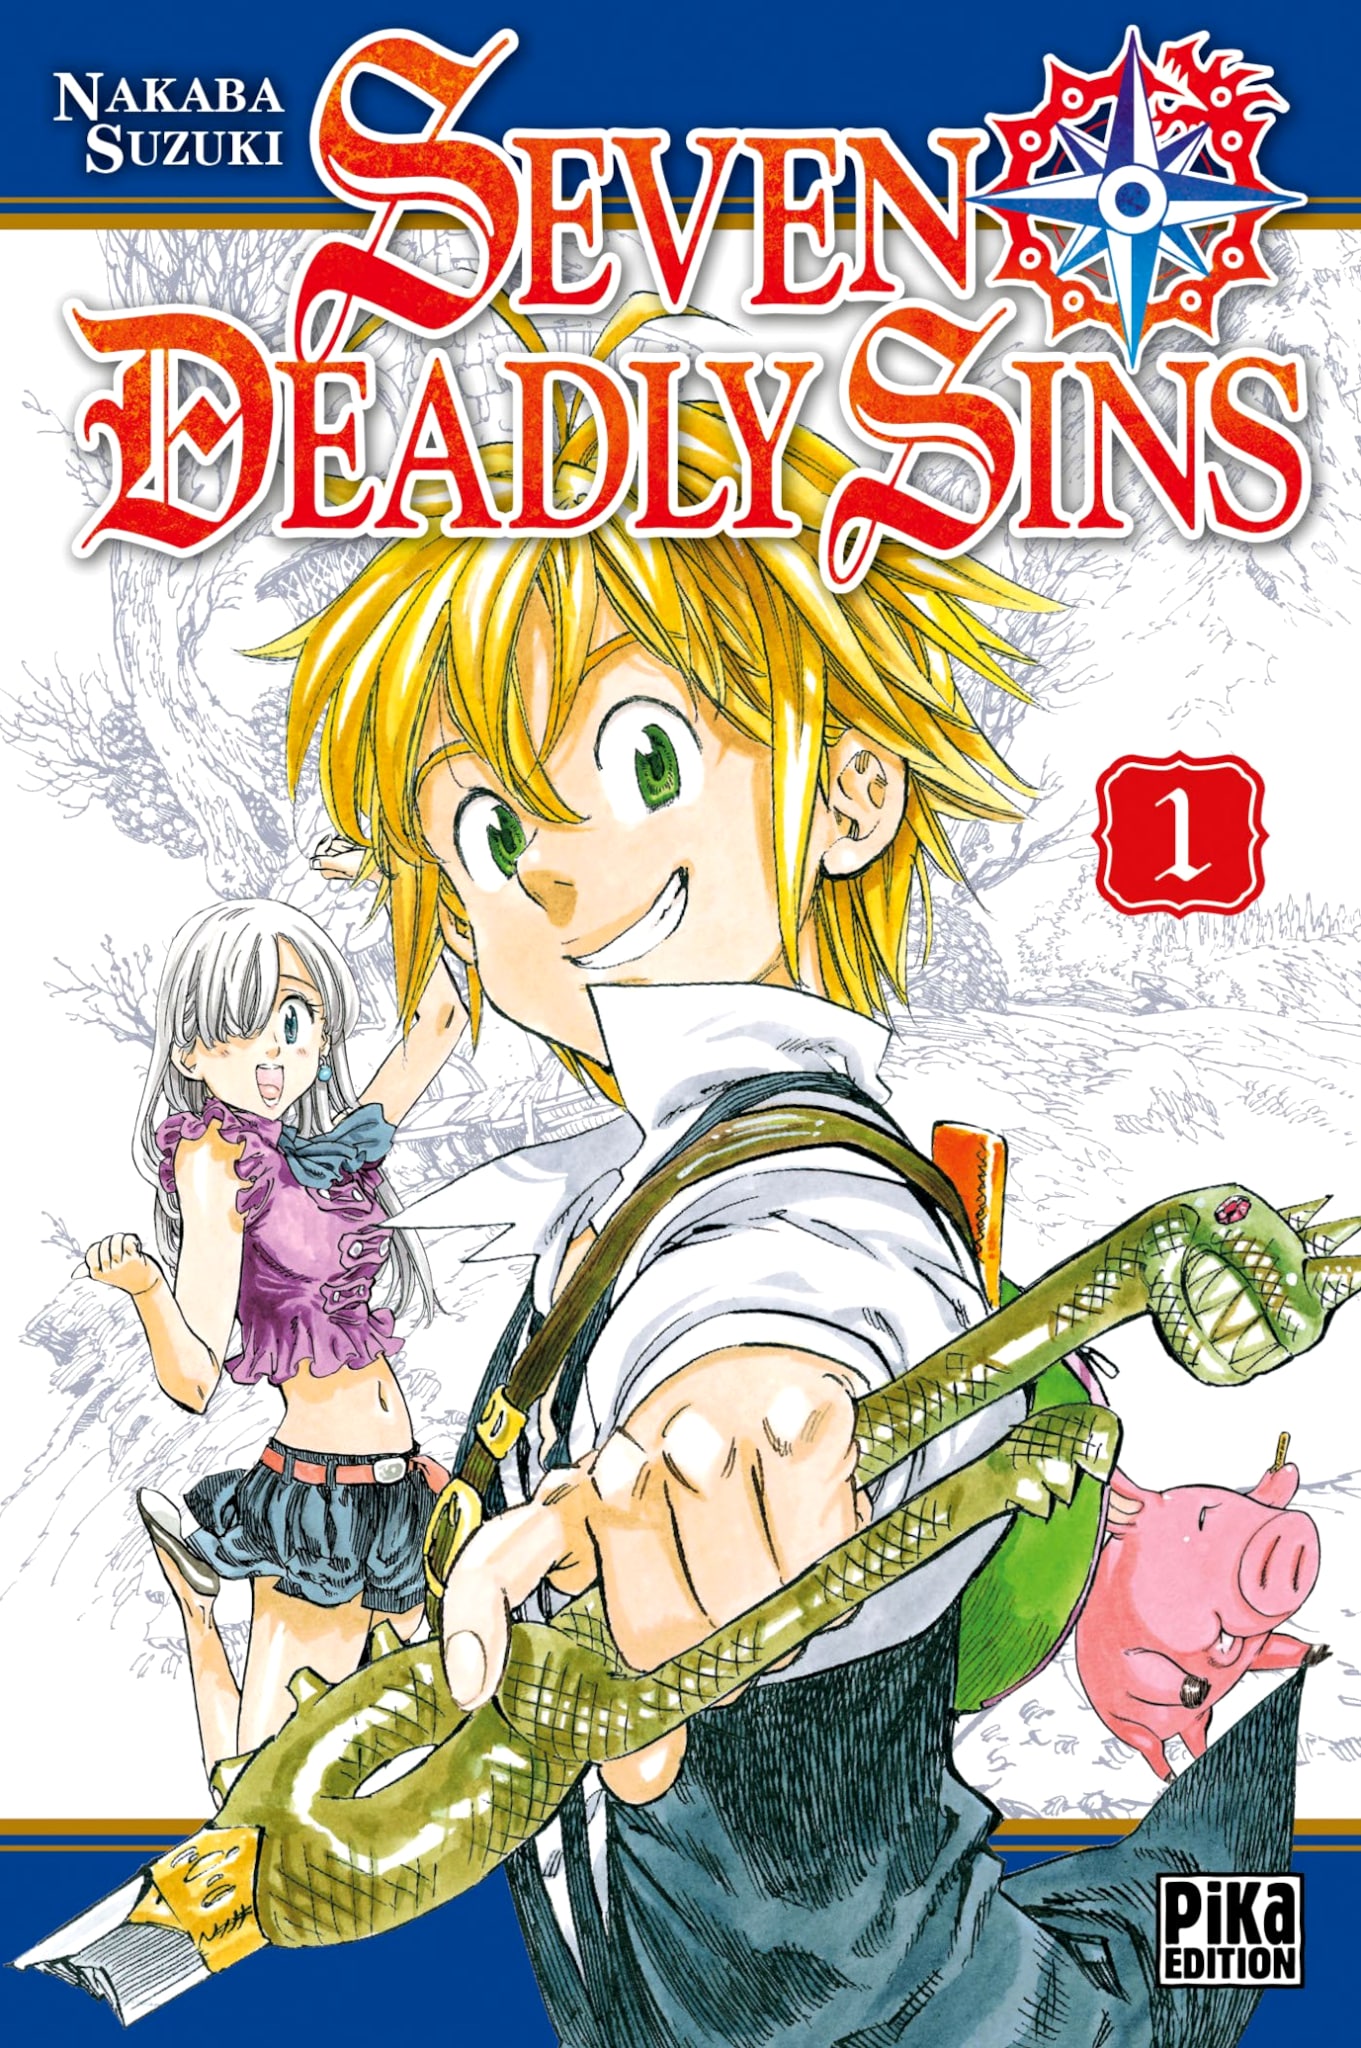 Tome 1 du manga The Seven Deadly Sins